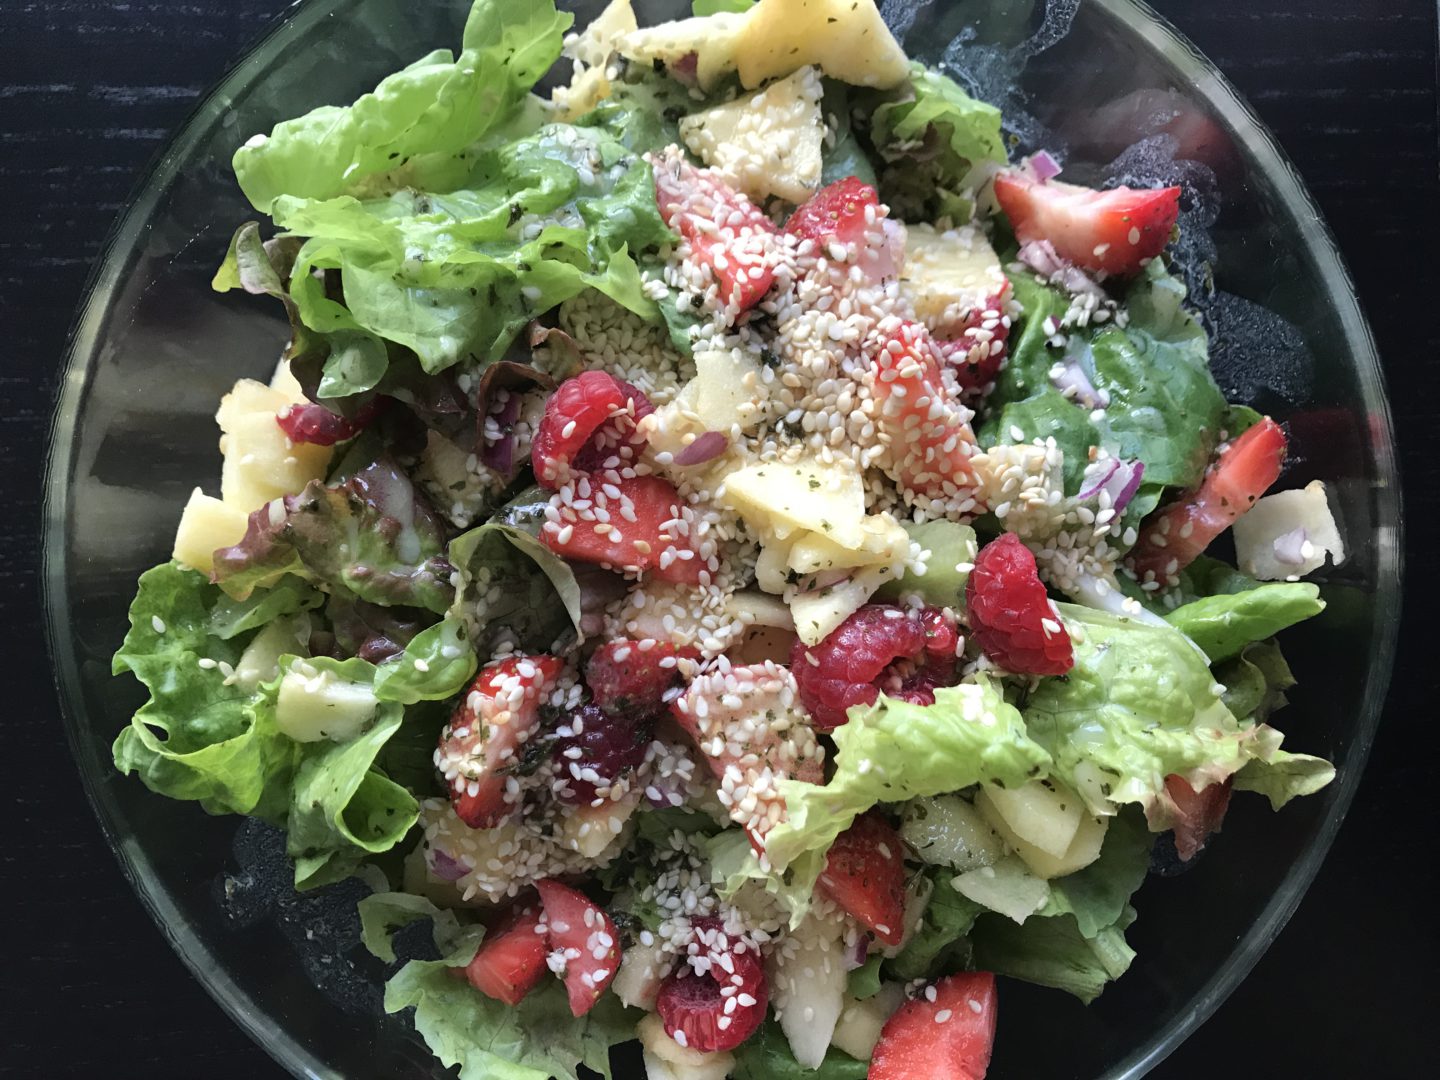 NUTRITION – Sommersalat mit Obst